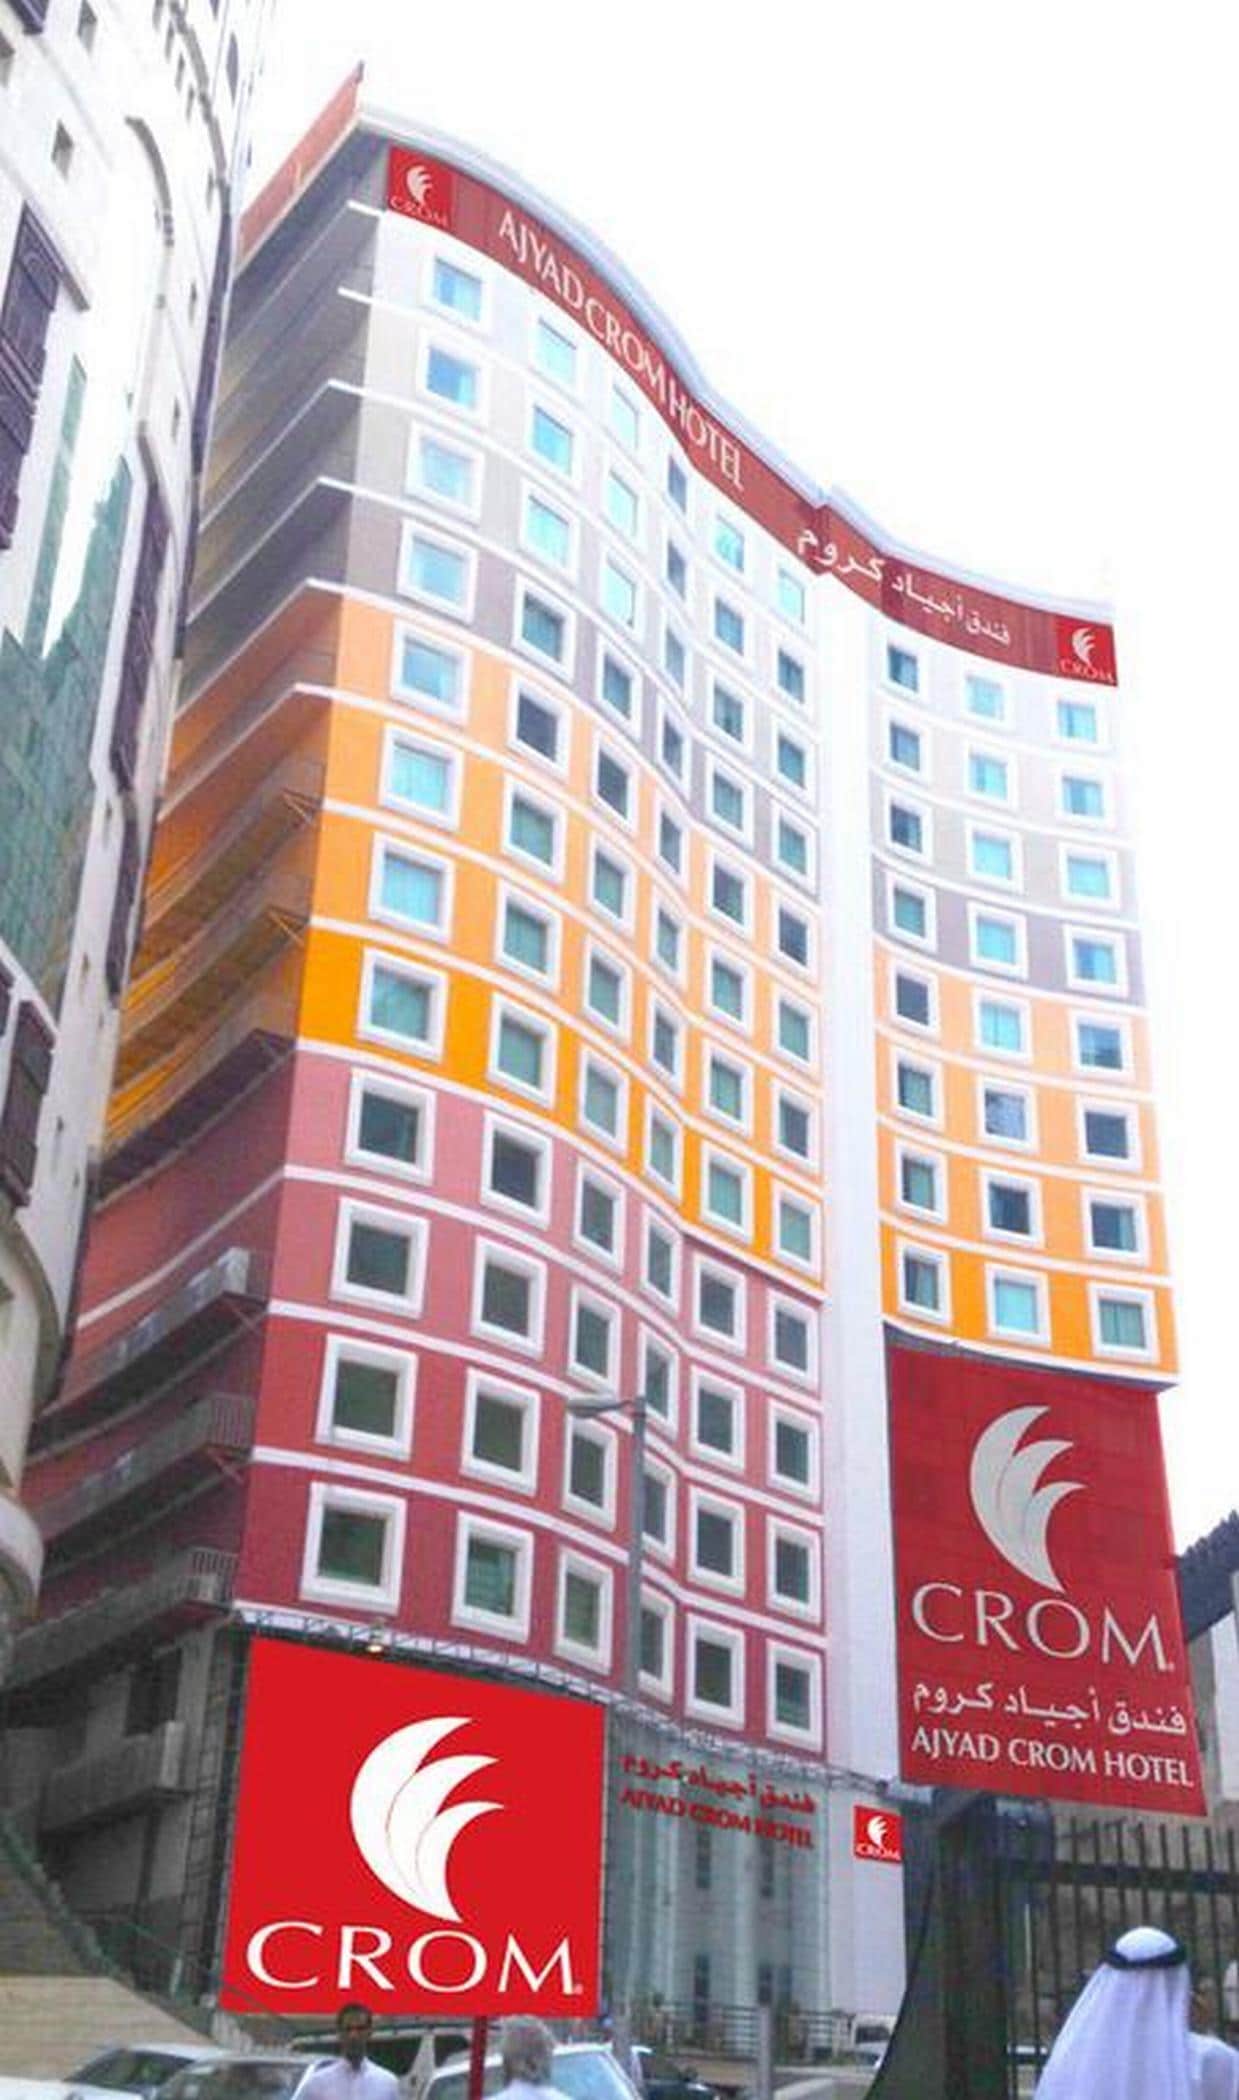 Ajyad Crom Hotel